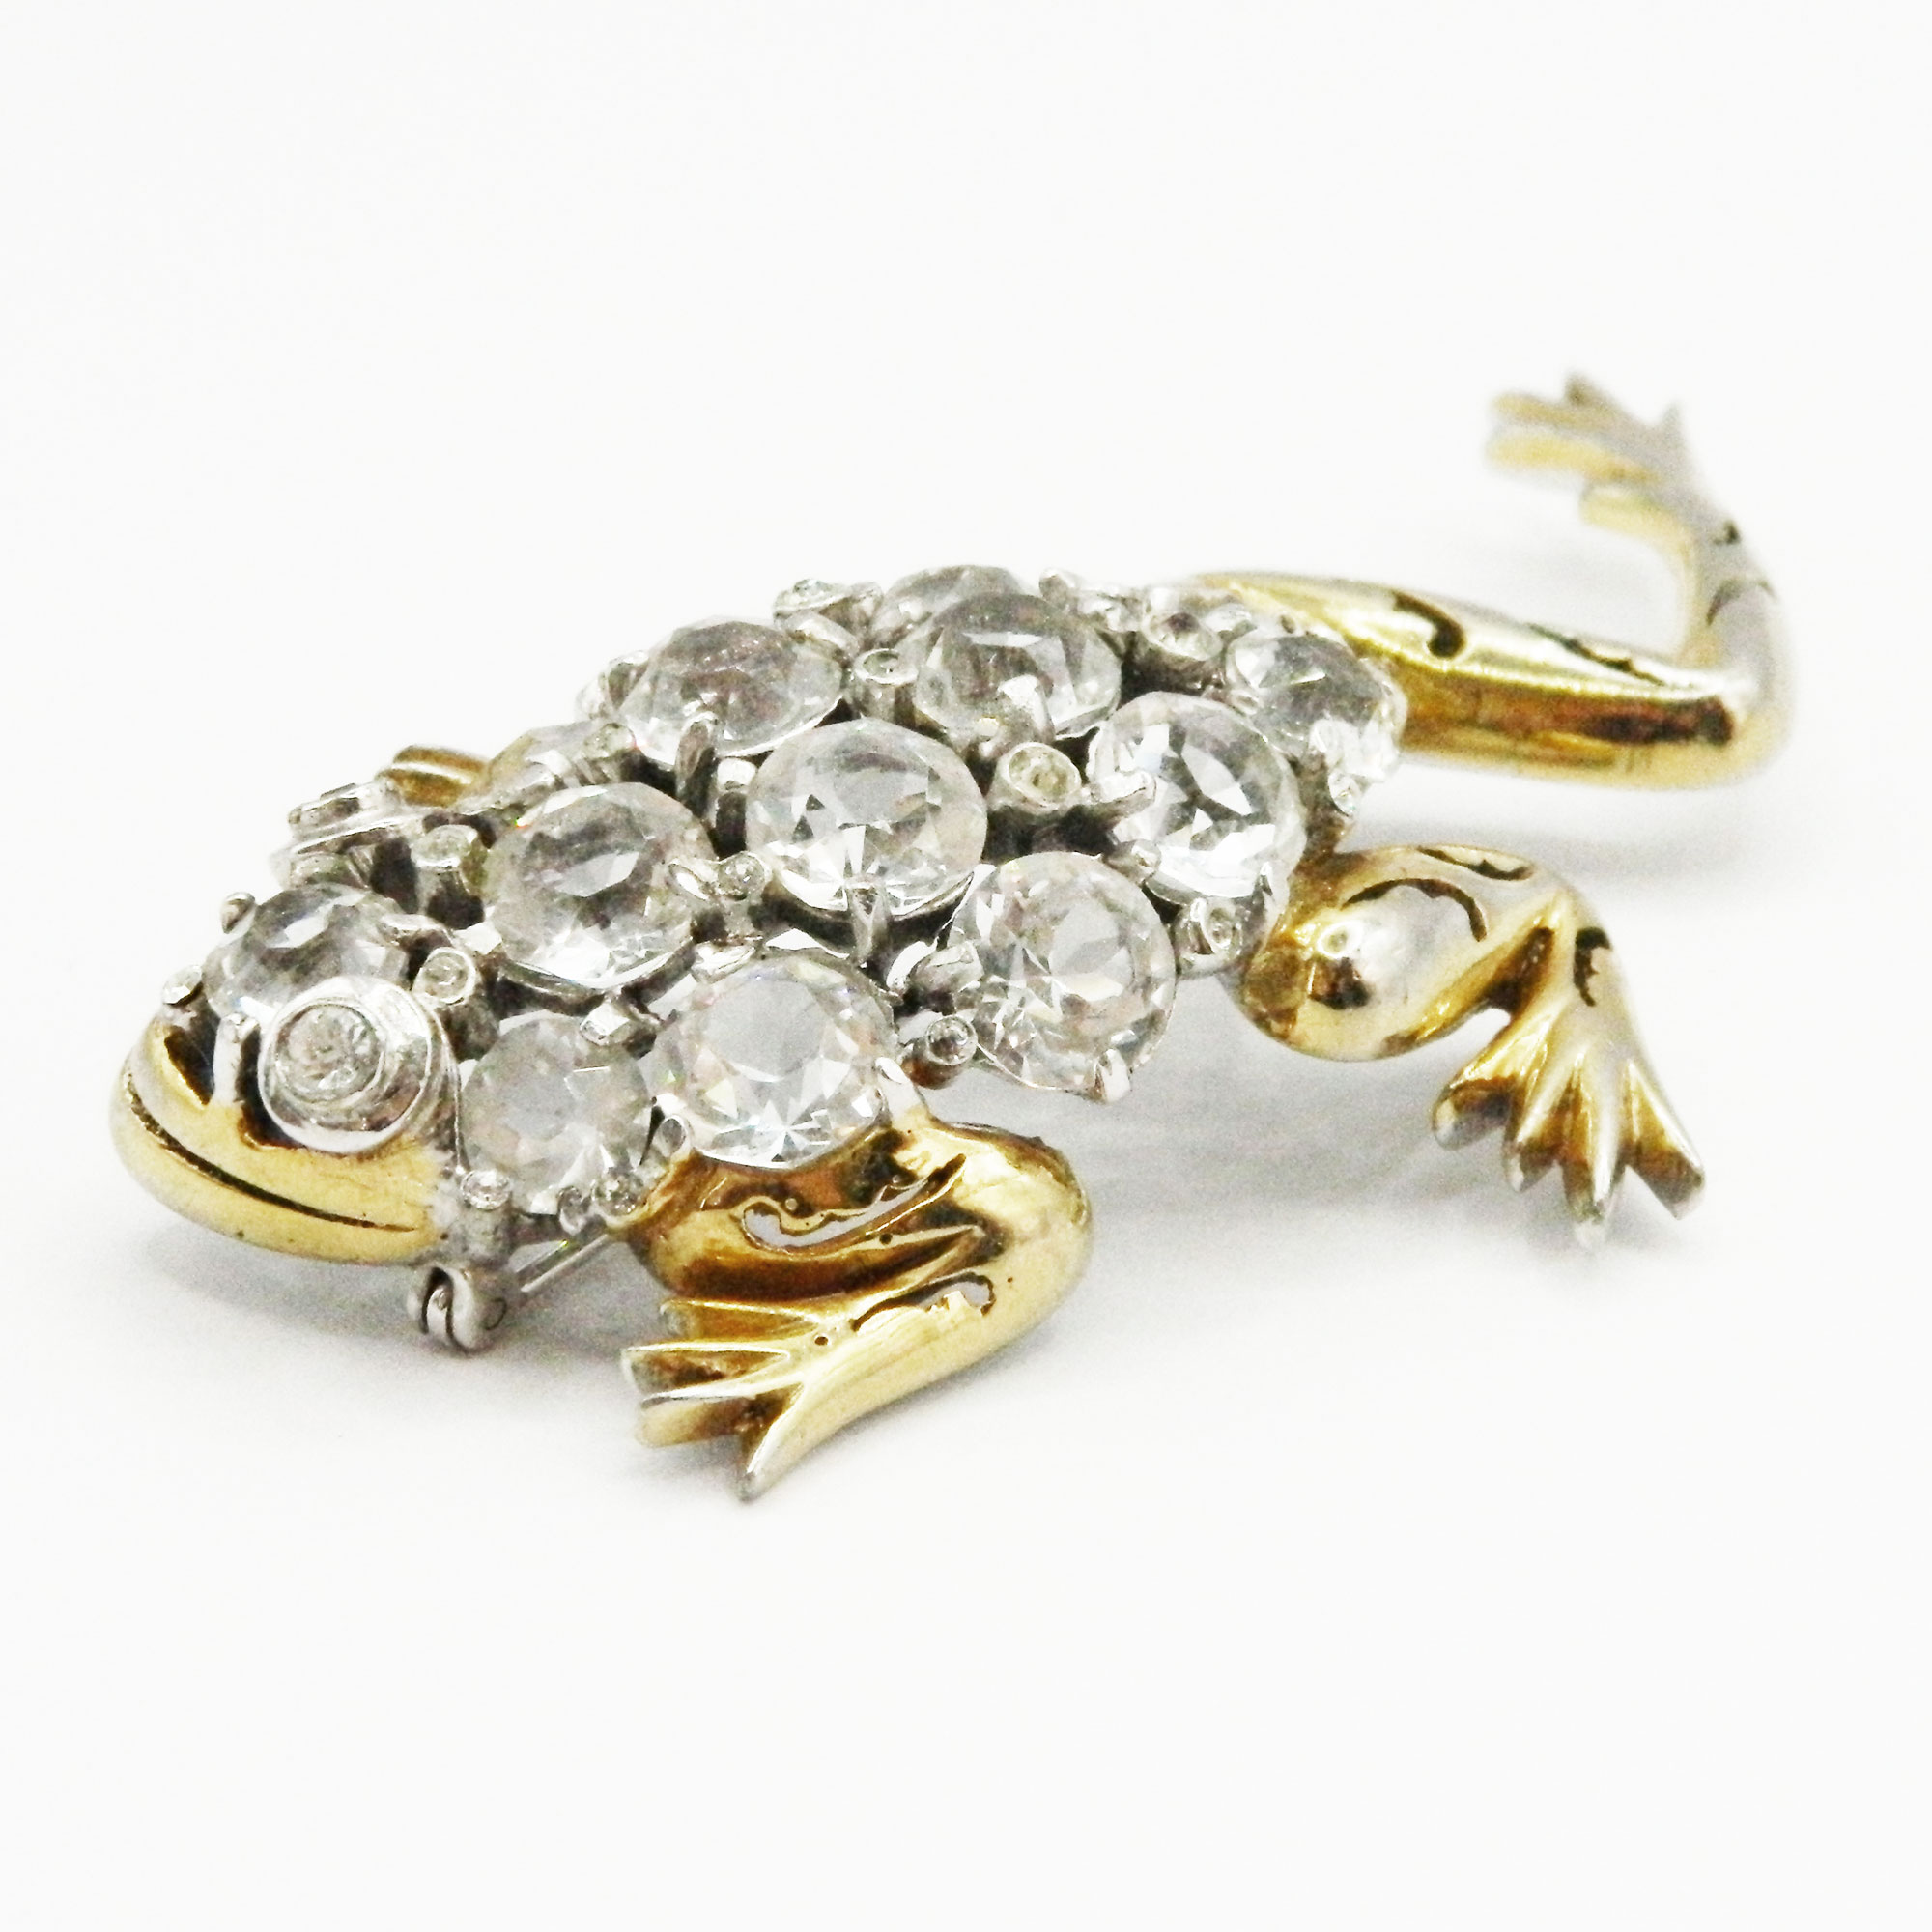 1940s Reja rhinestone frog brooch and earring set